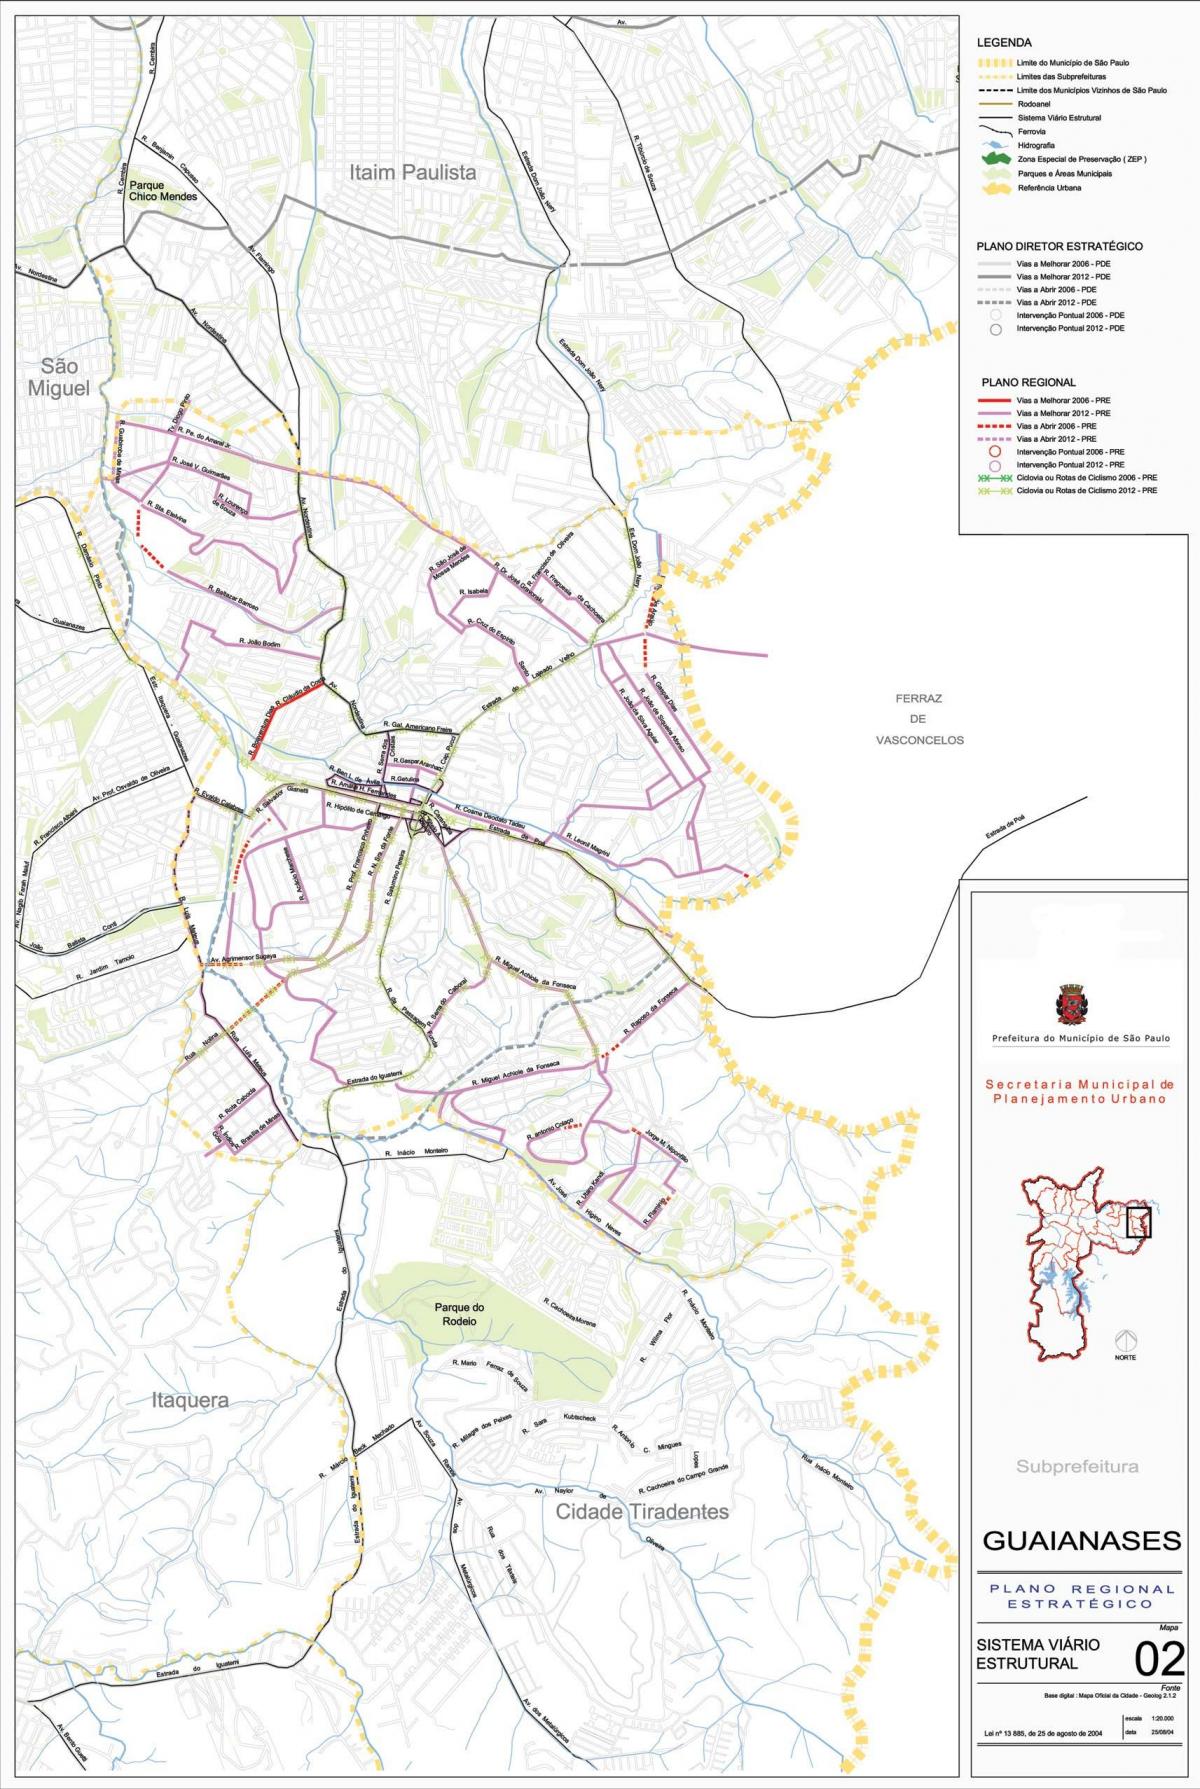 Zemljevid Guaianases Sao Paulo - Ceste